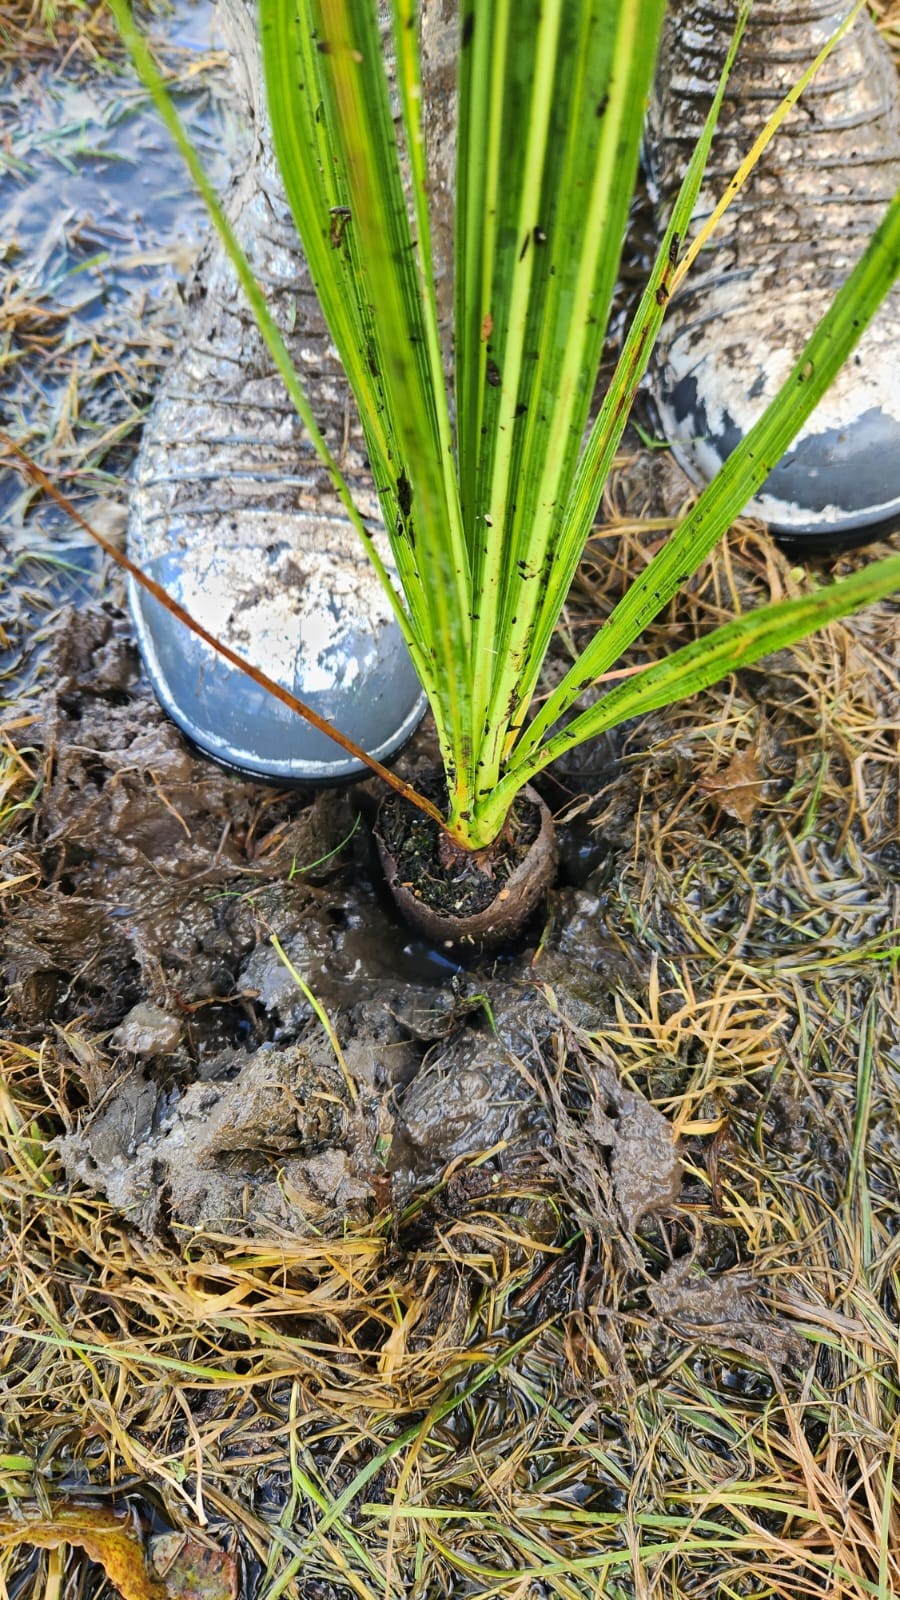 Native Garden Nursery biodegradable pot